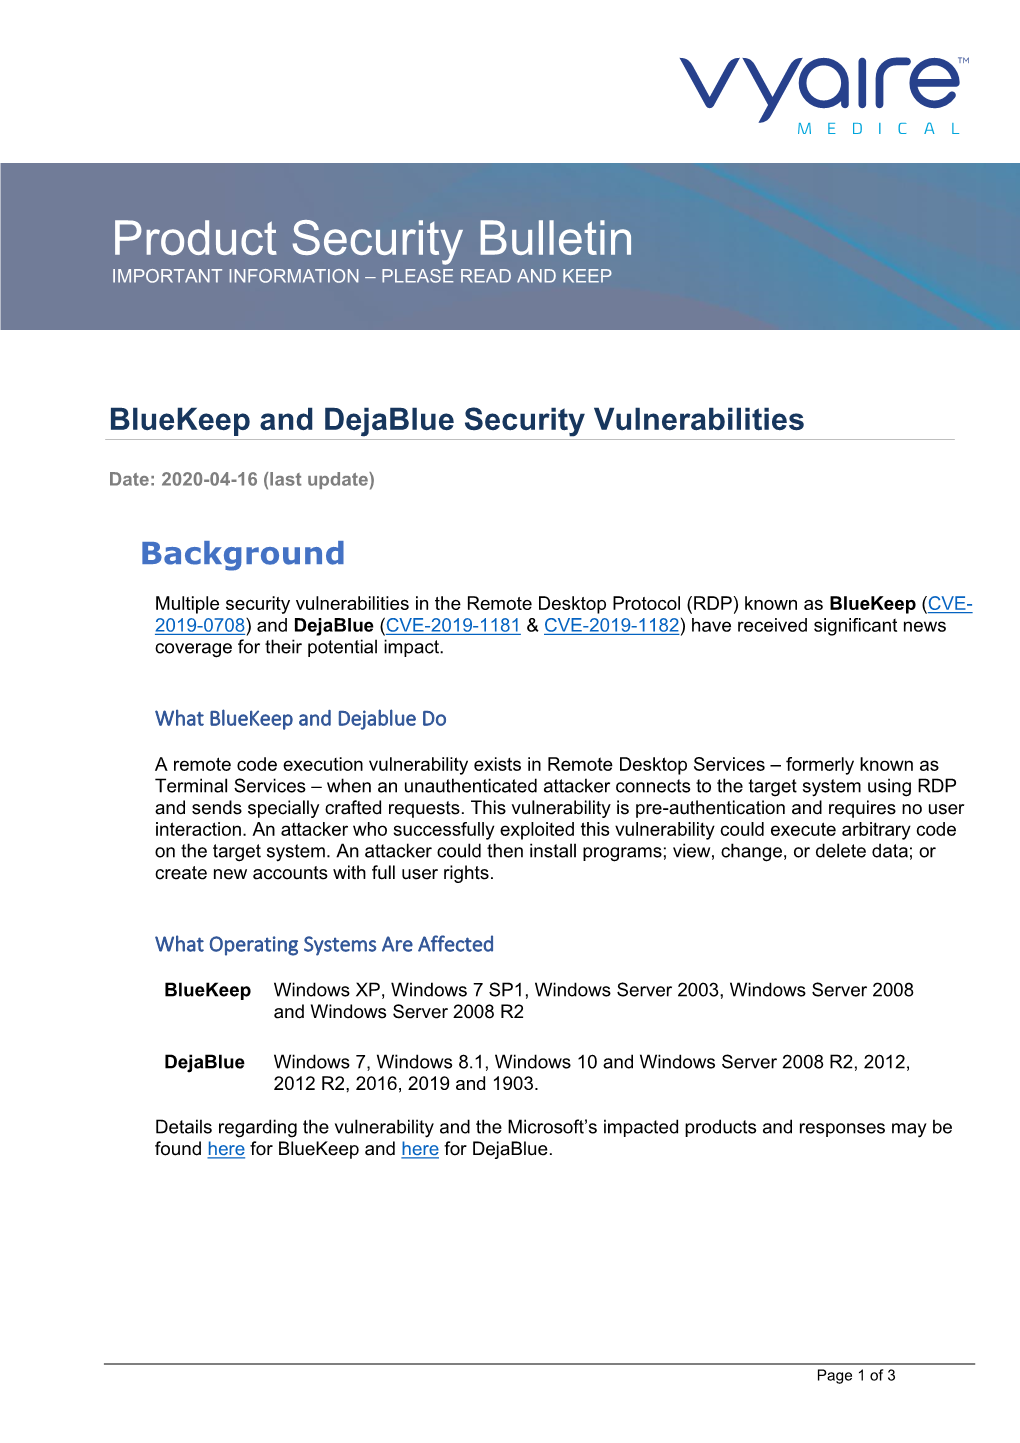 Security Bulletin for Bluekeep and Dejablue Vulnerabilities